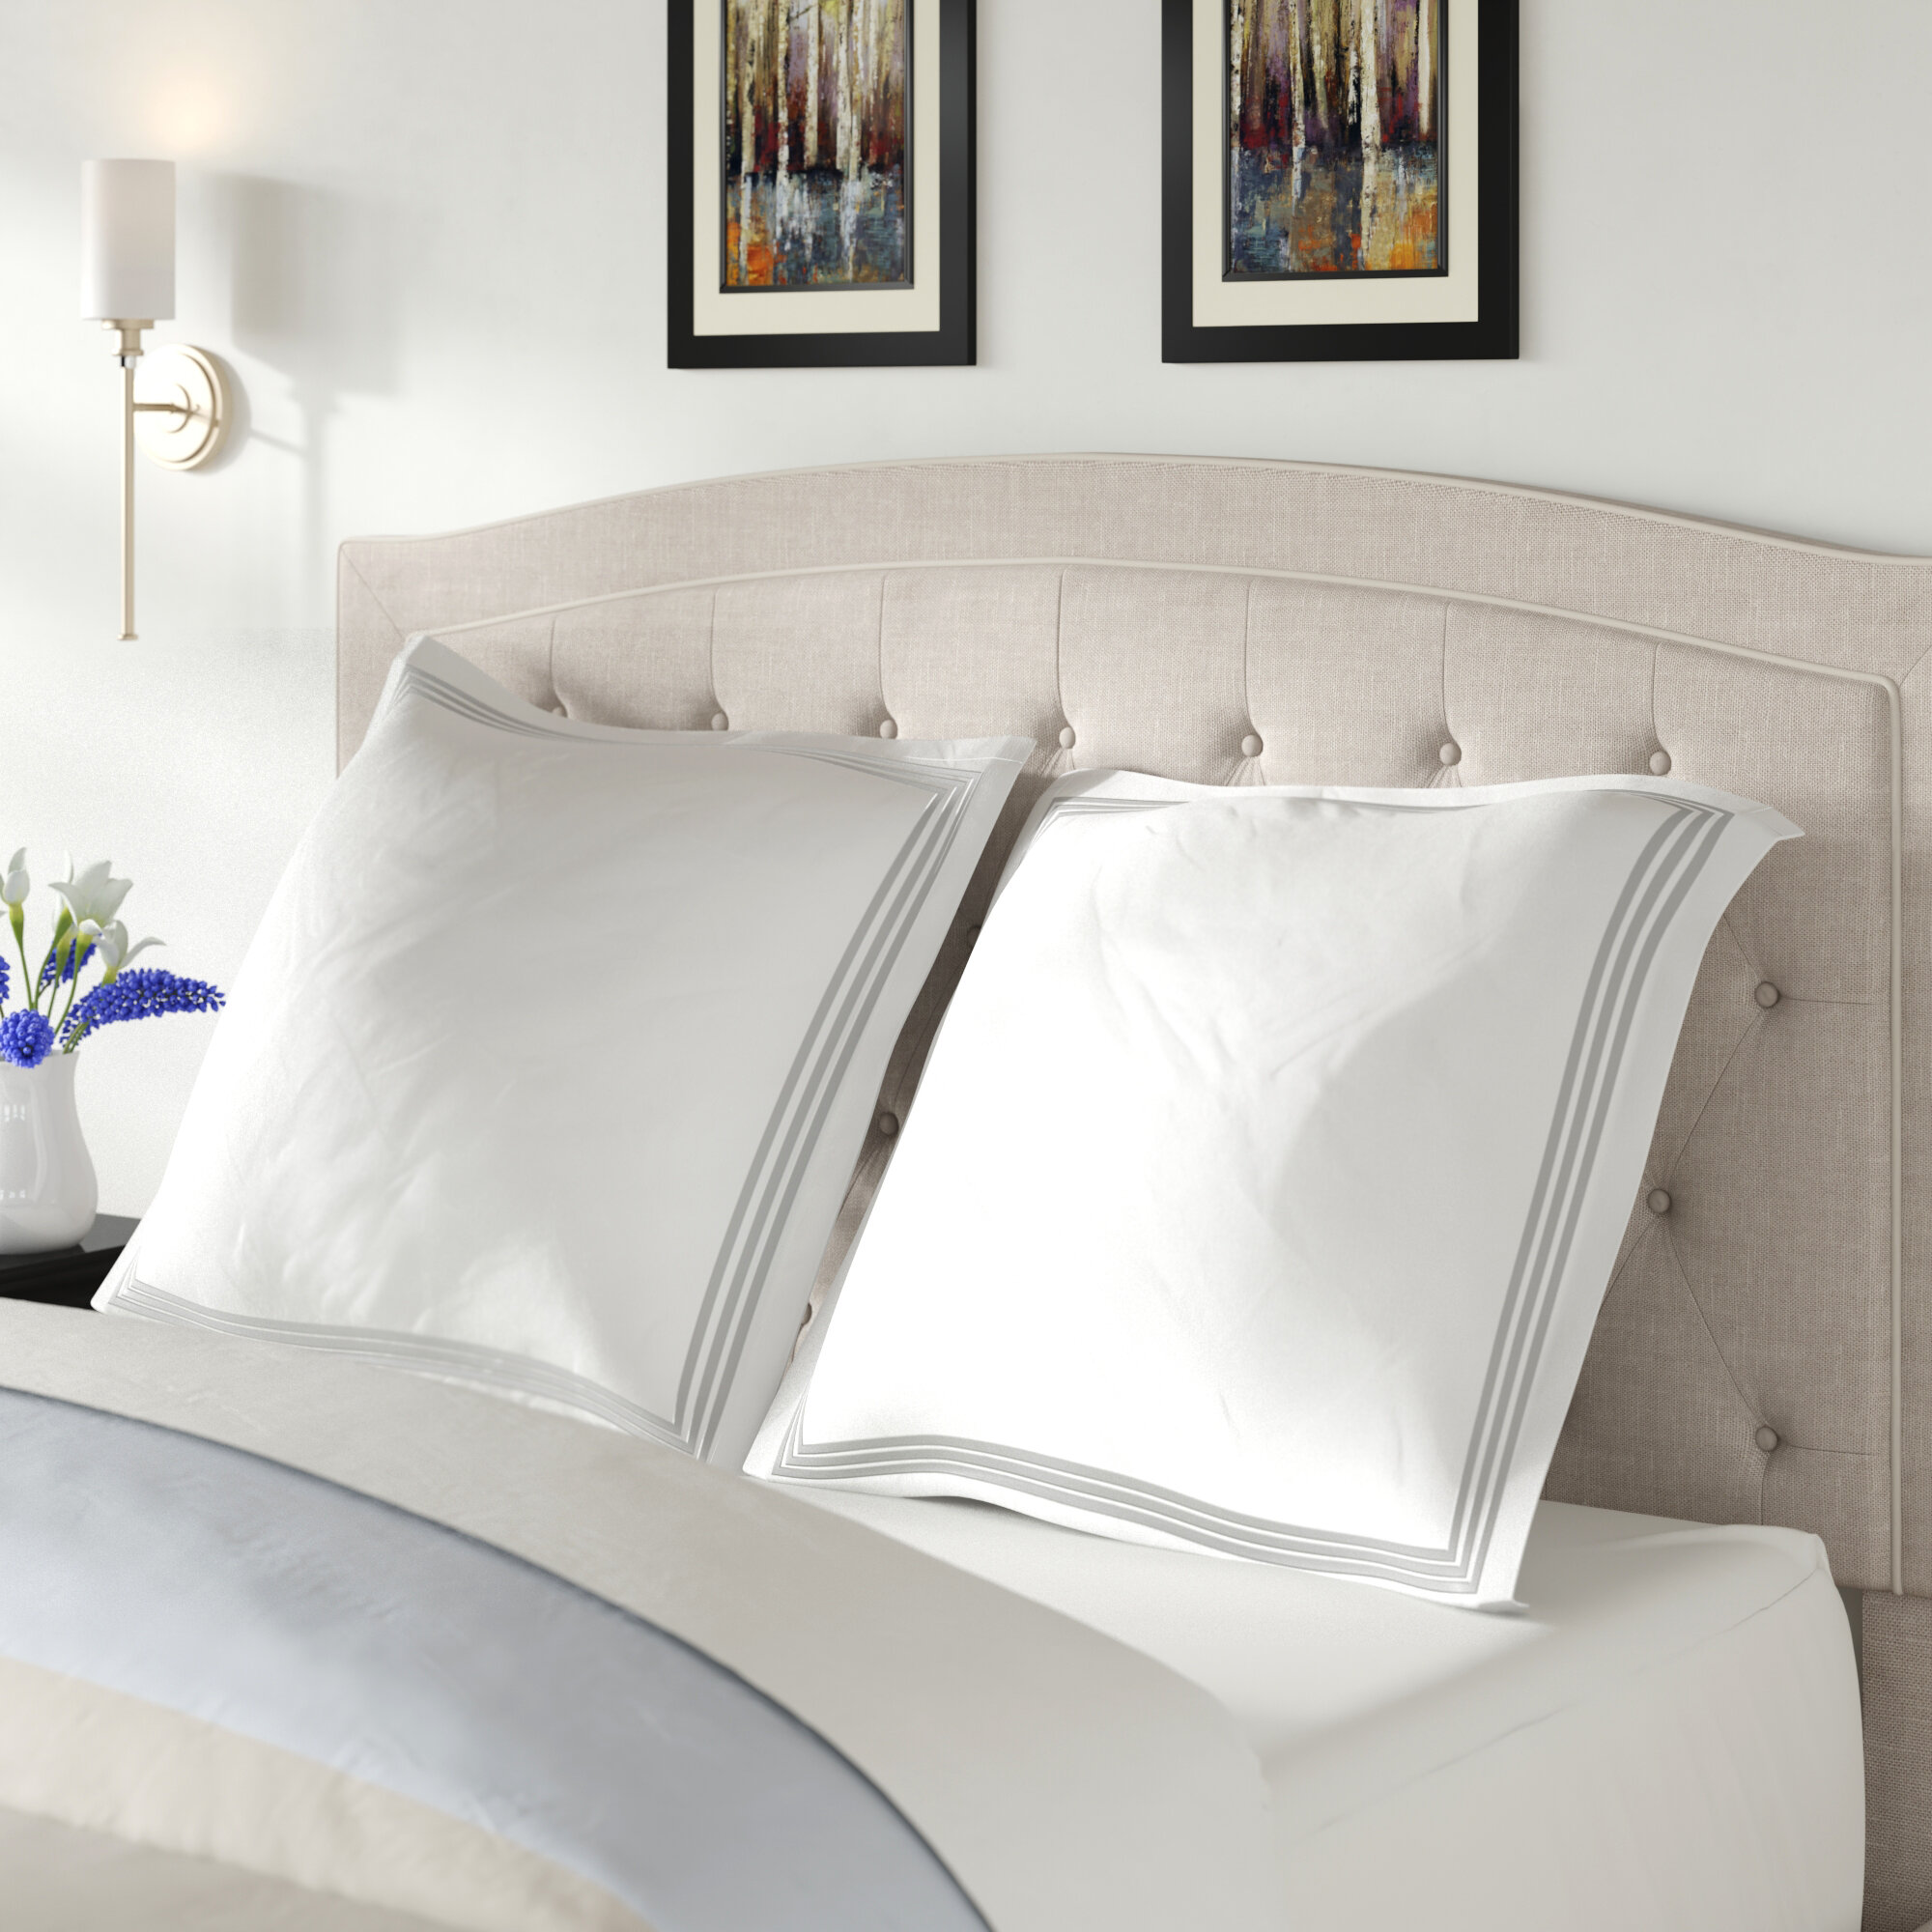 Birch Pillow Sham Decorative Pillowcase 3 Sizes for Bedroom Decor 